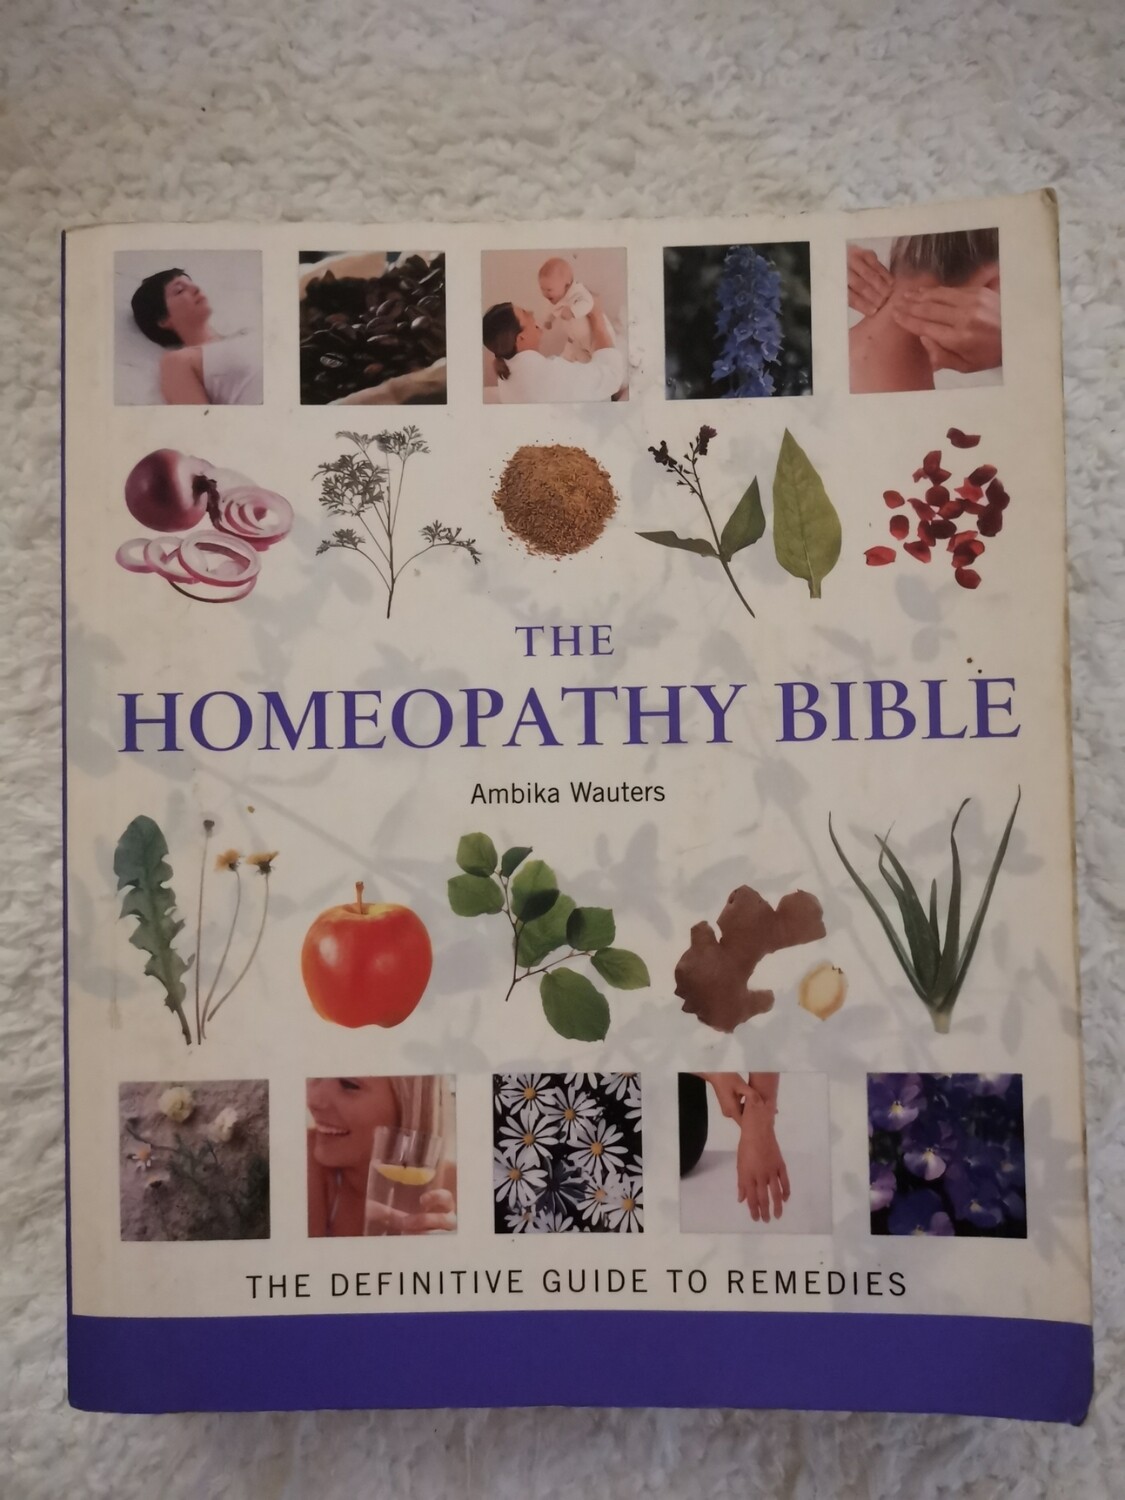 The homeopathy Bible, Ambika Wauters